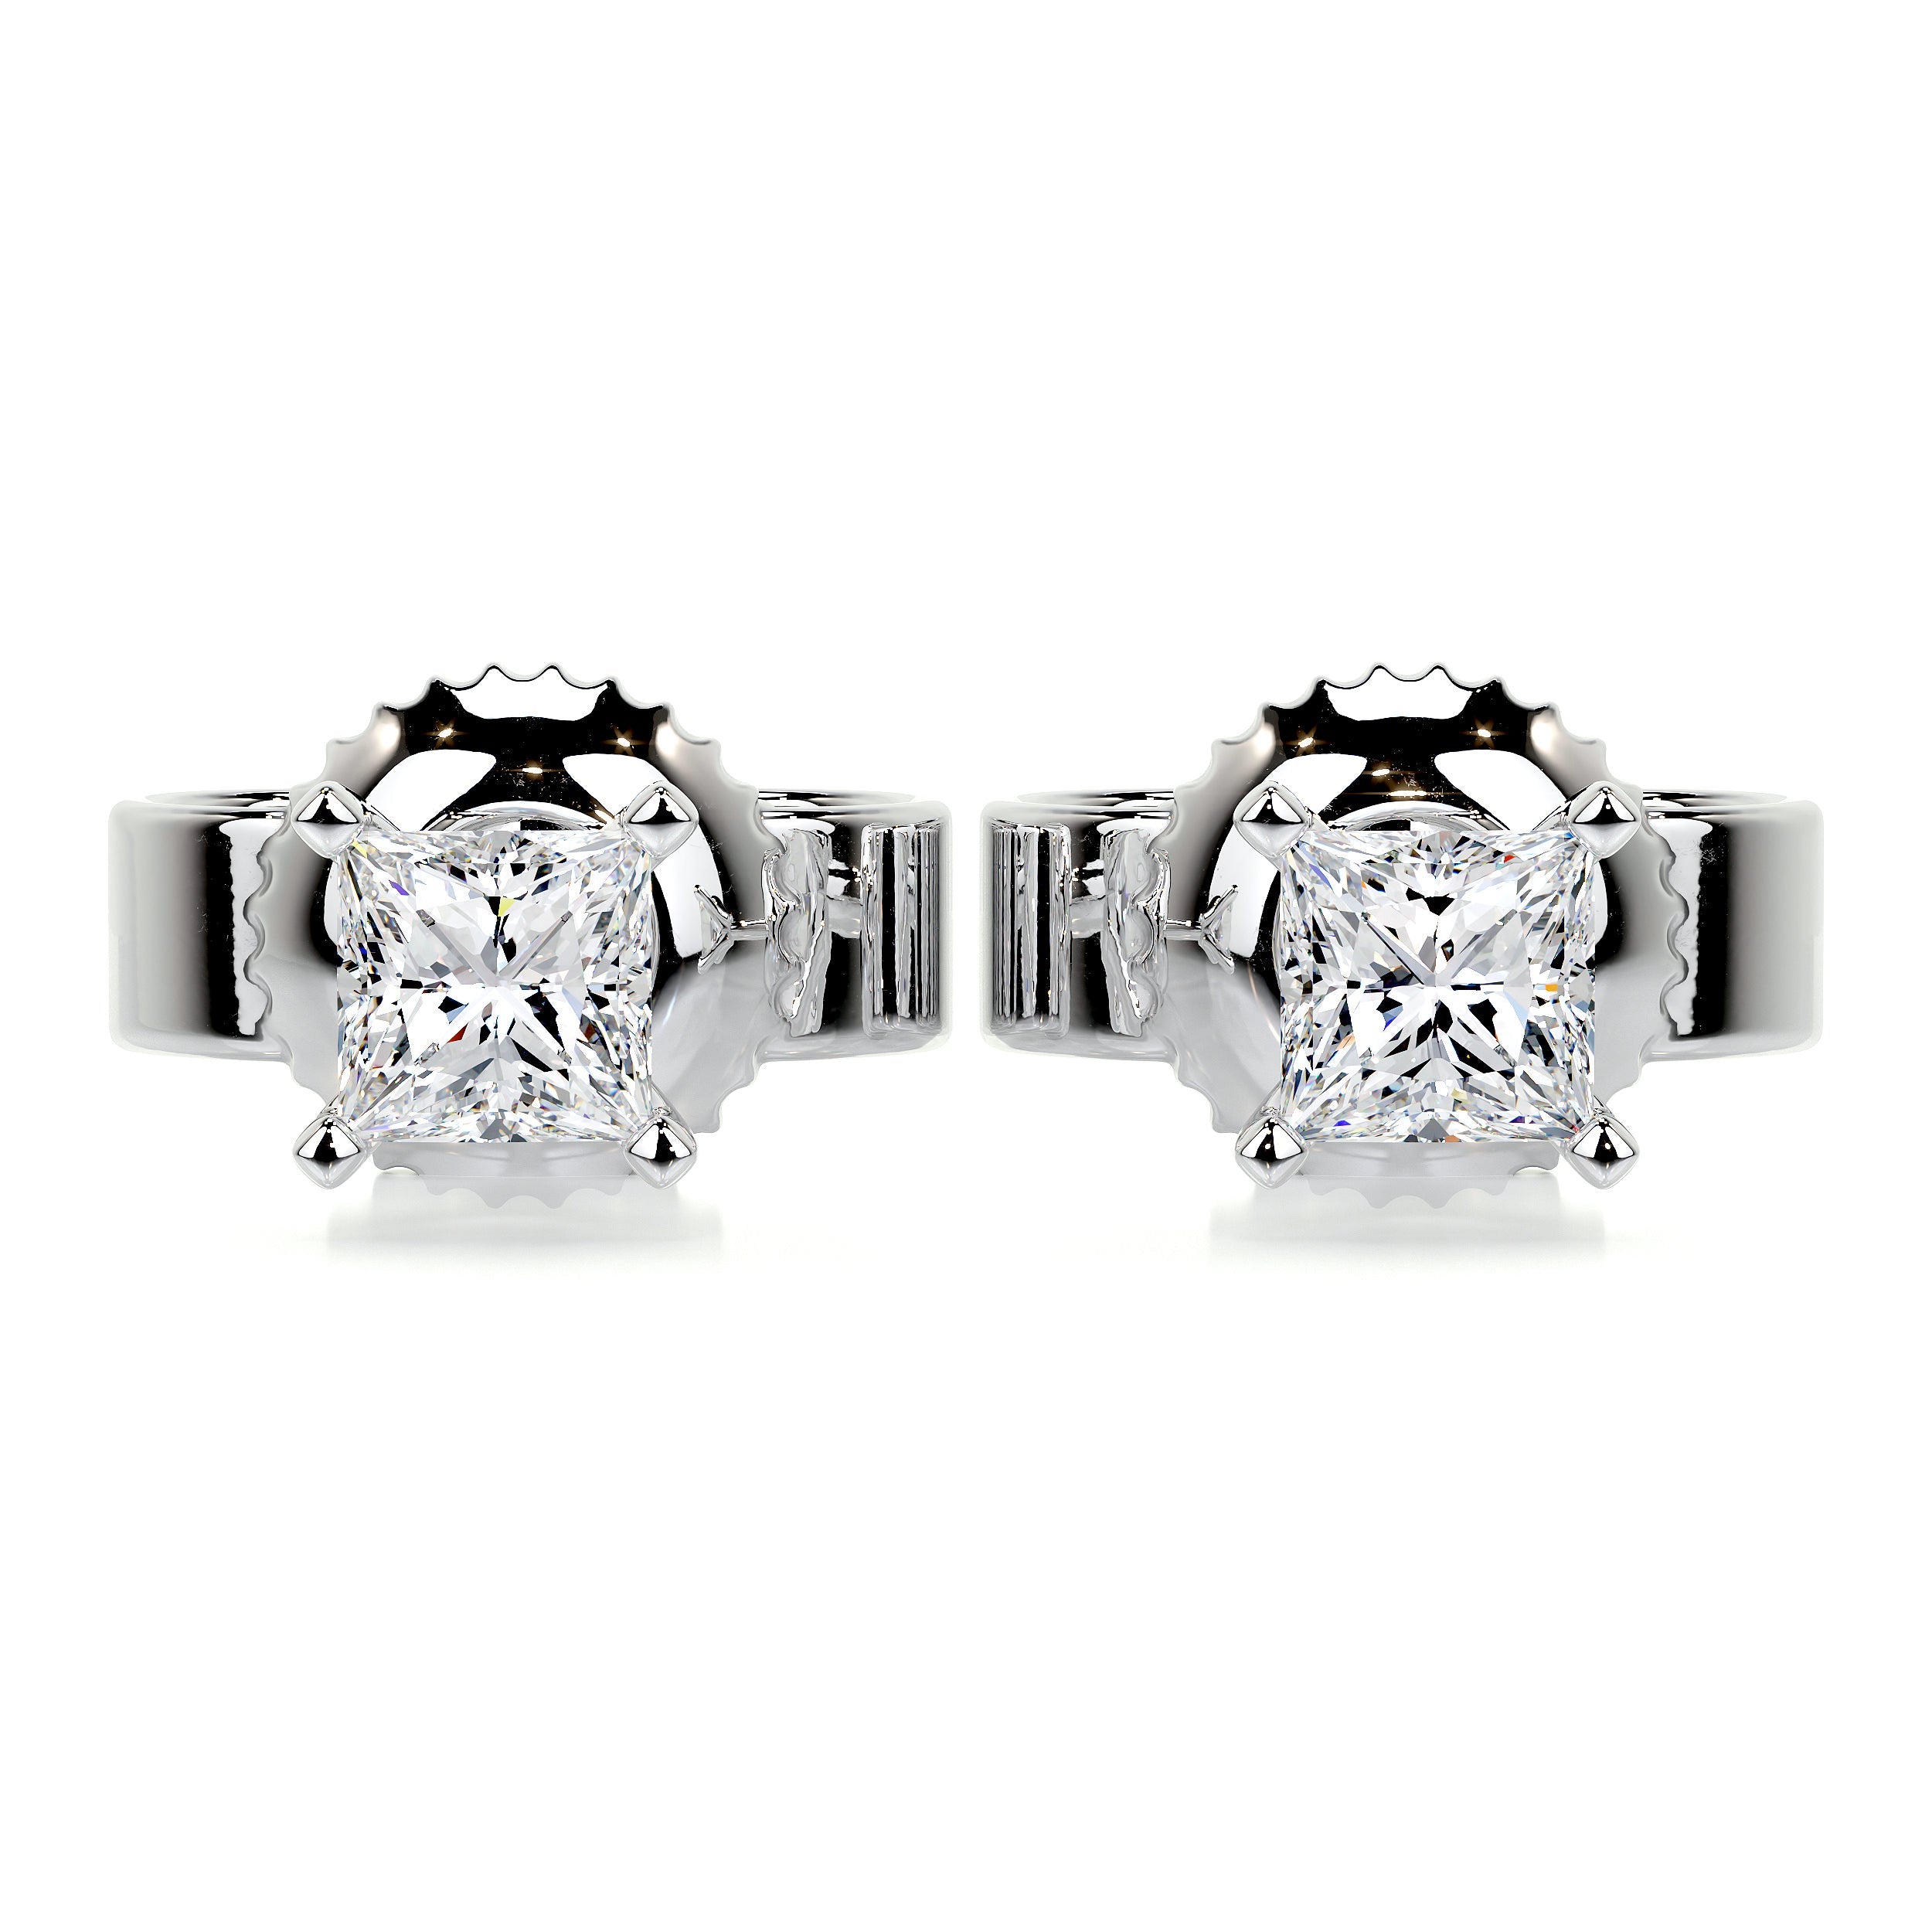 Jamie Diamond Earrings   (1 Carat) -14K White Gold